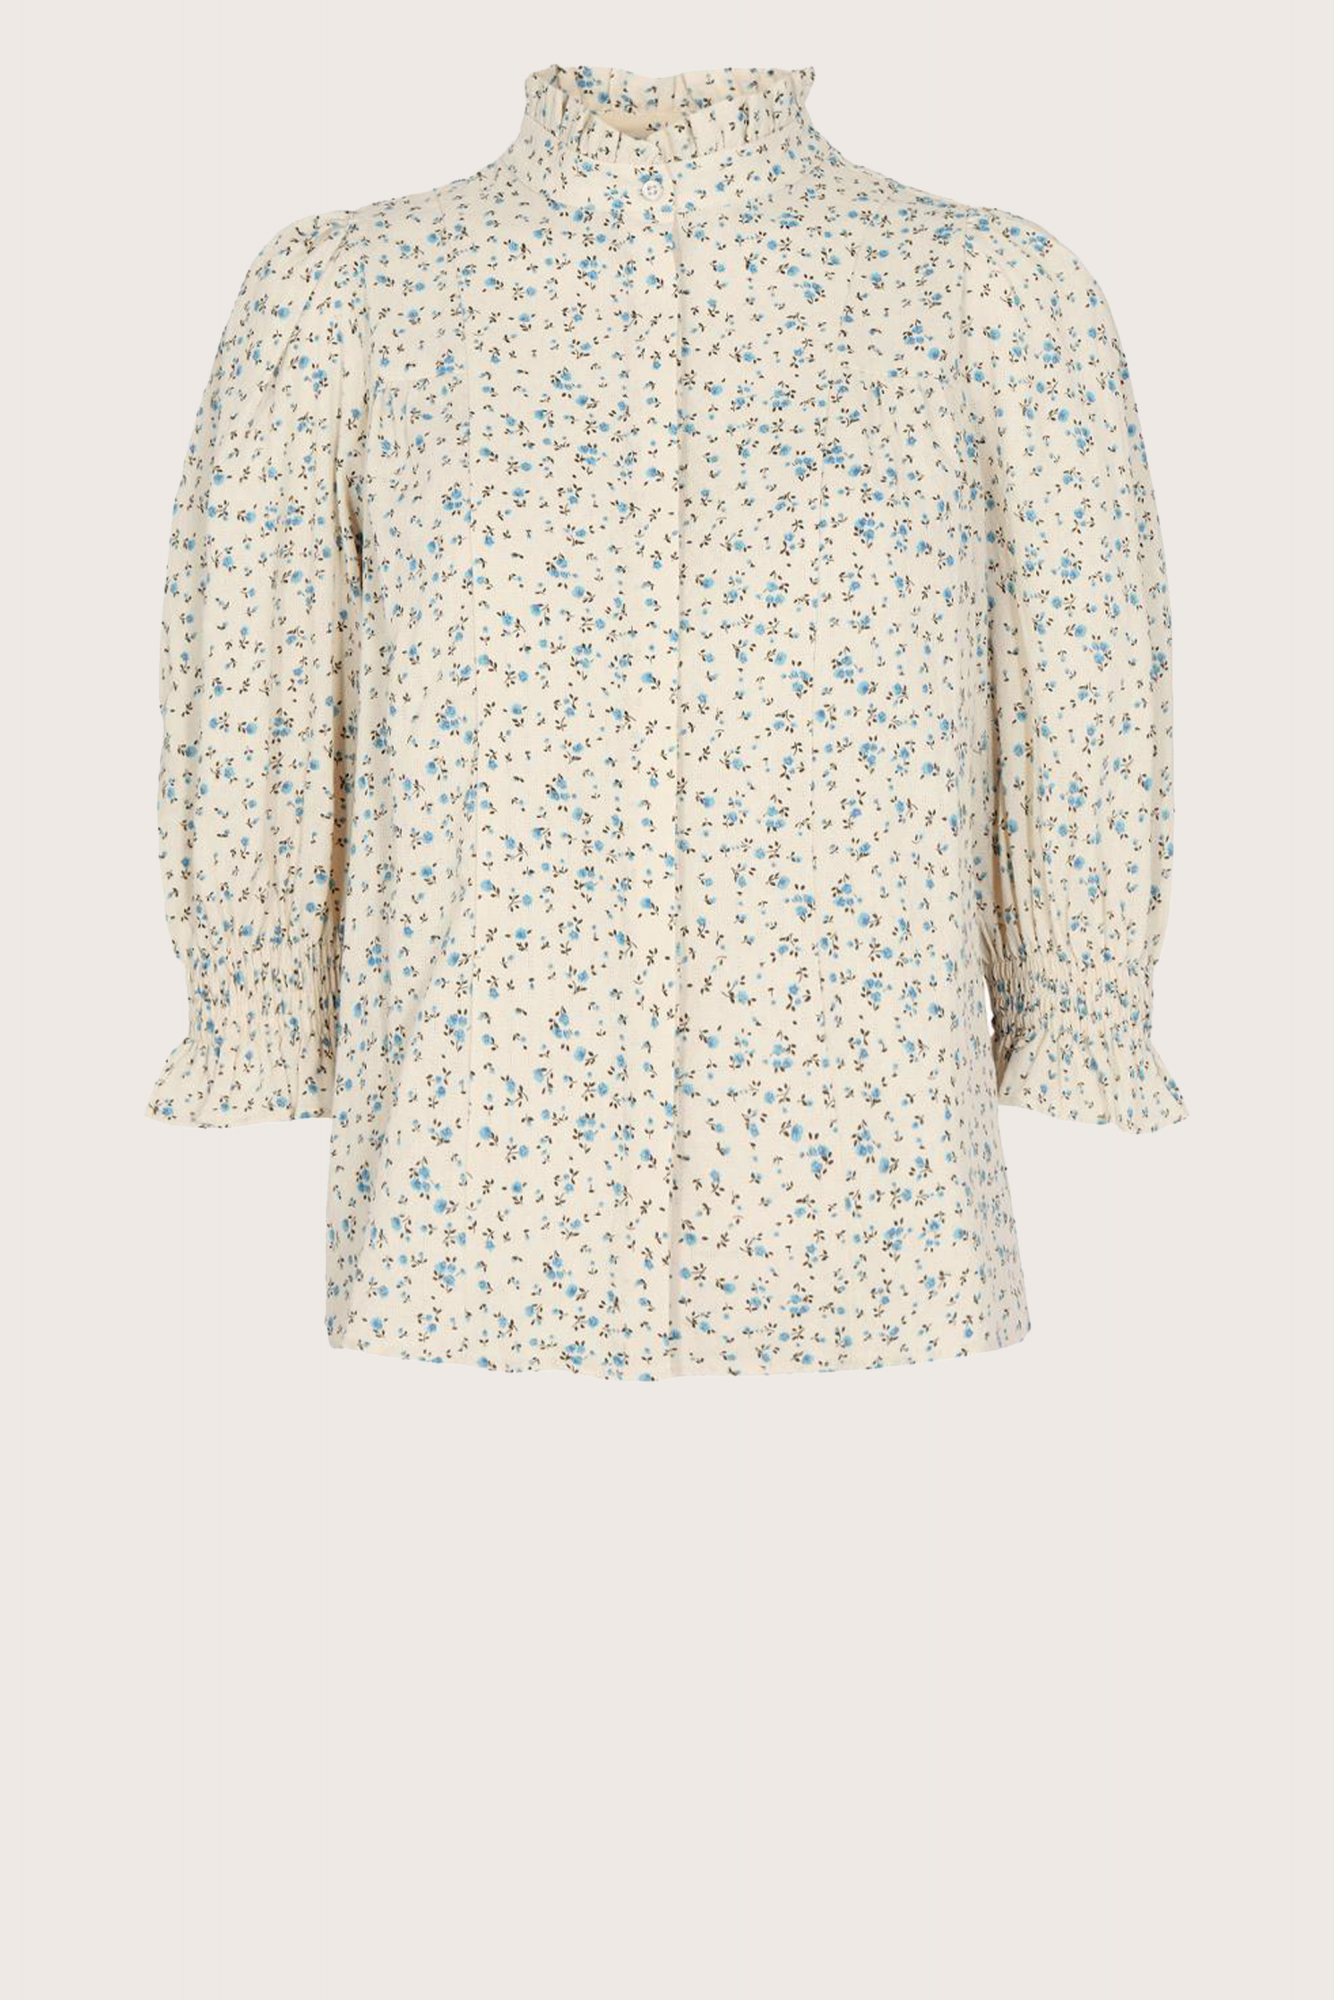 Co'couture petra flower shirt Beige